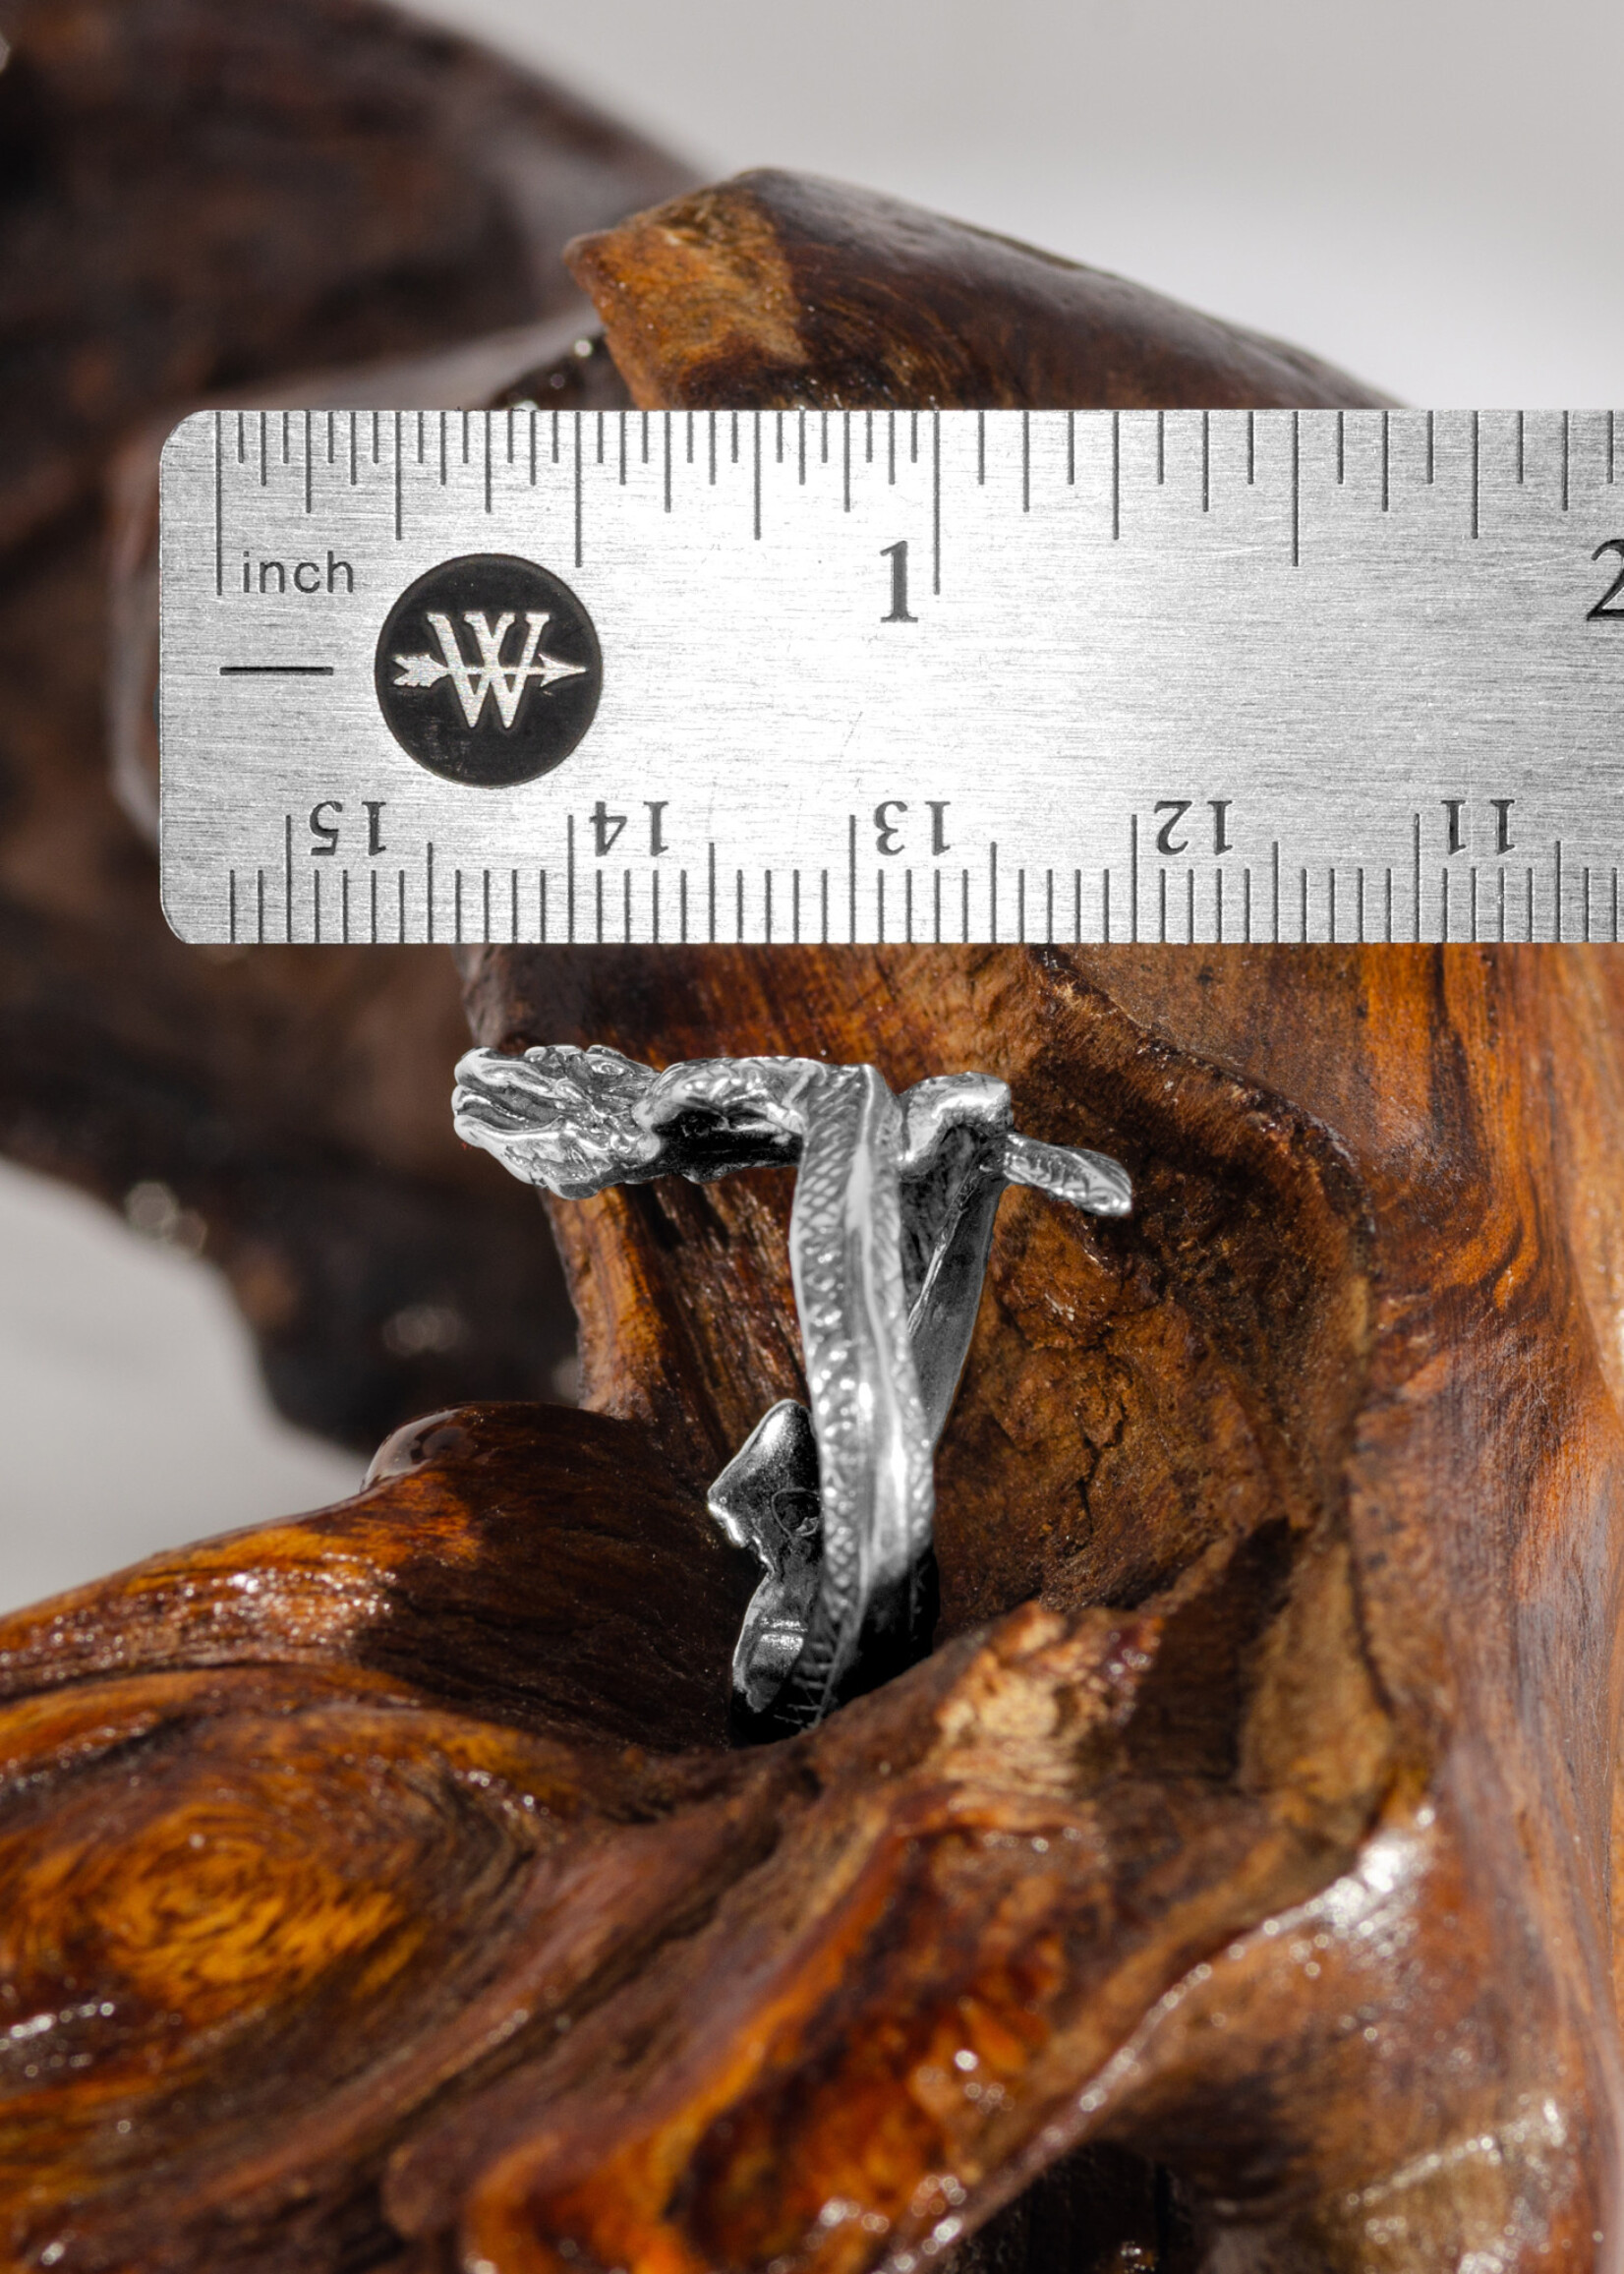 Wellstone Jewelry Dragon's Treasure Ring Adjustable